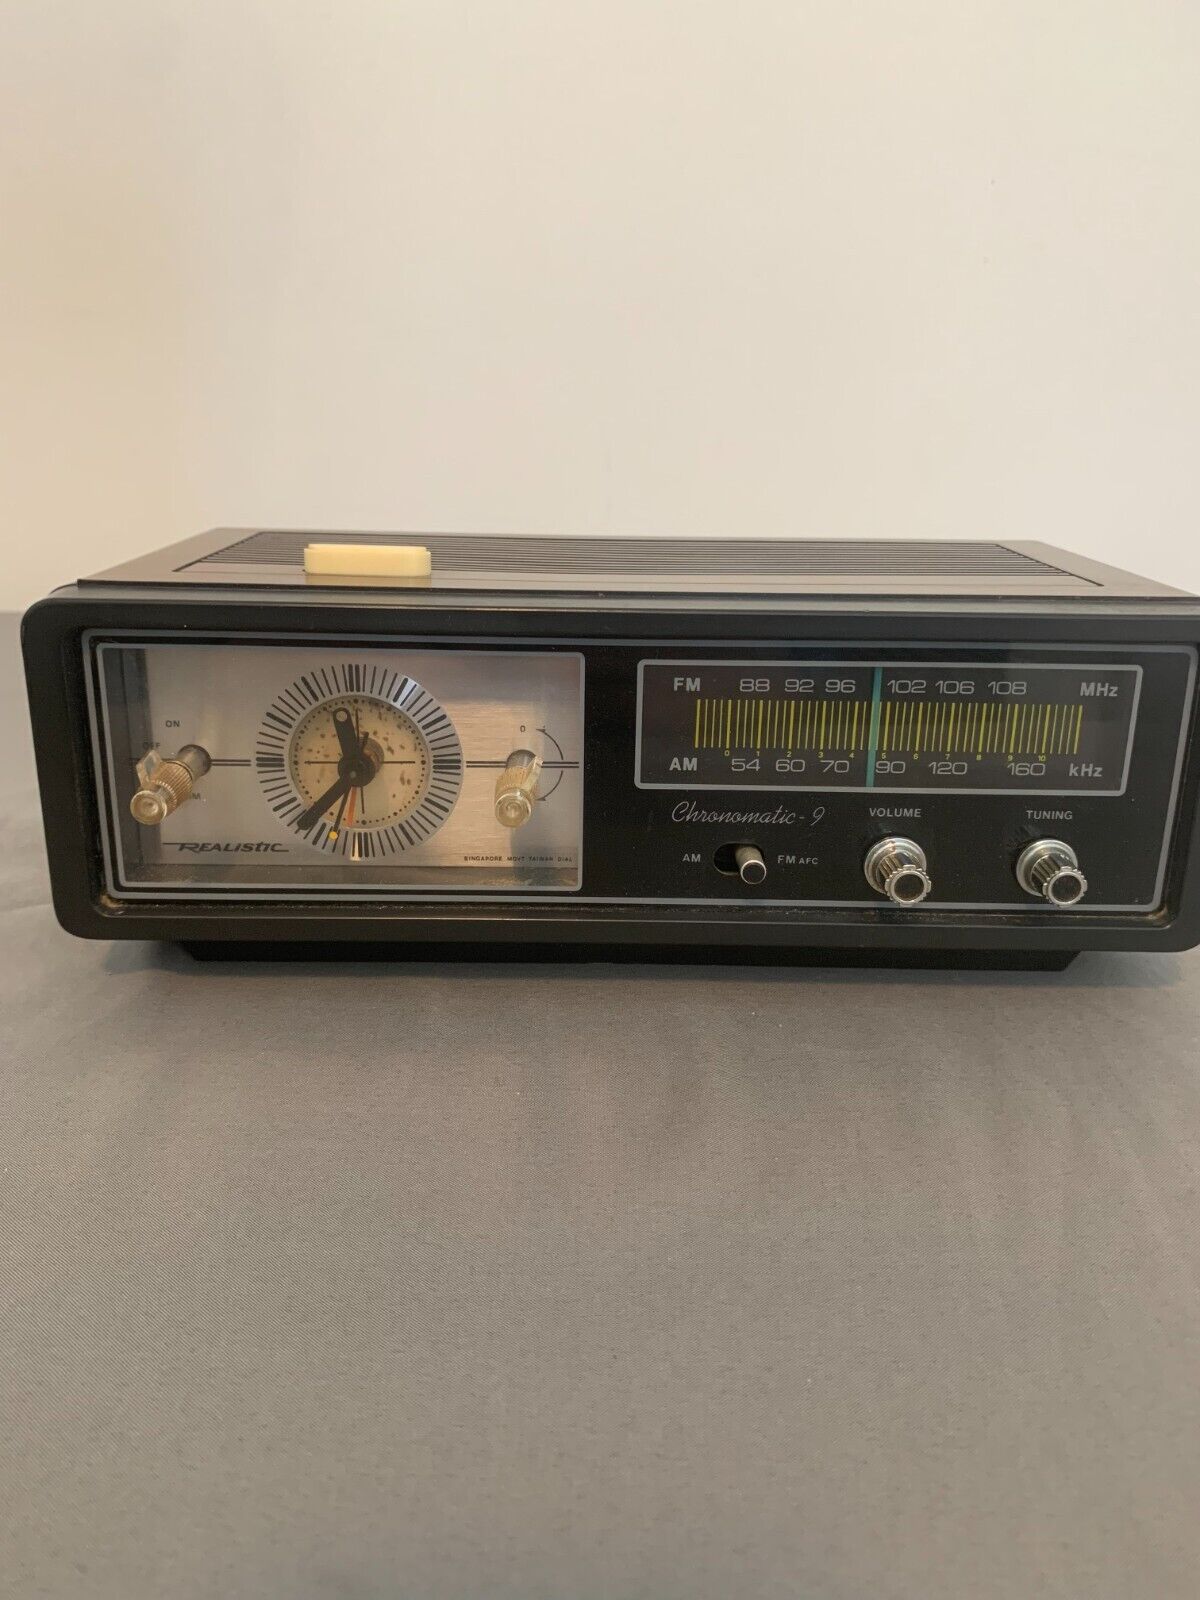 Vintage Realistic Chronomatic 9 Analog AM/FM Alarm Clock Radio 12-1454 VERY RARE